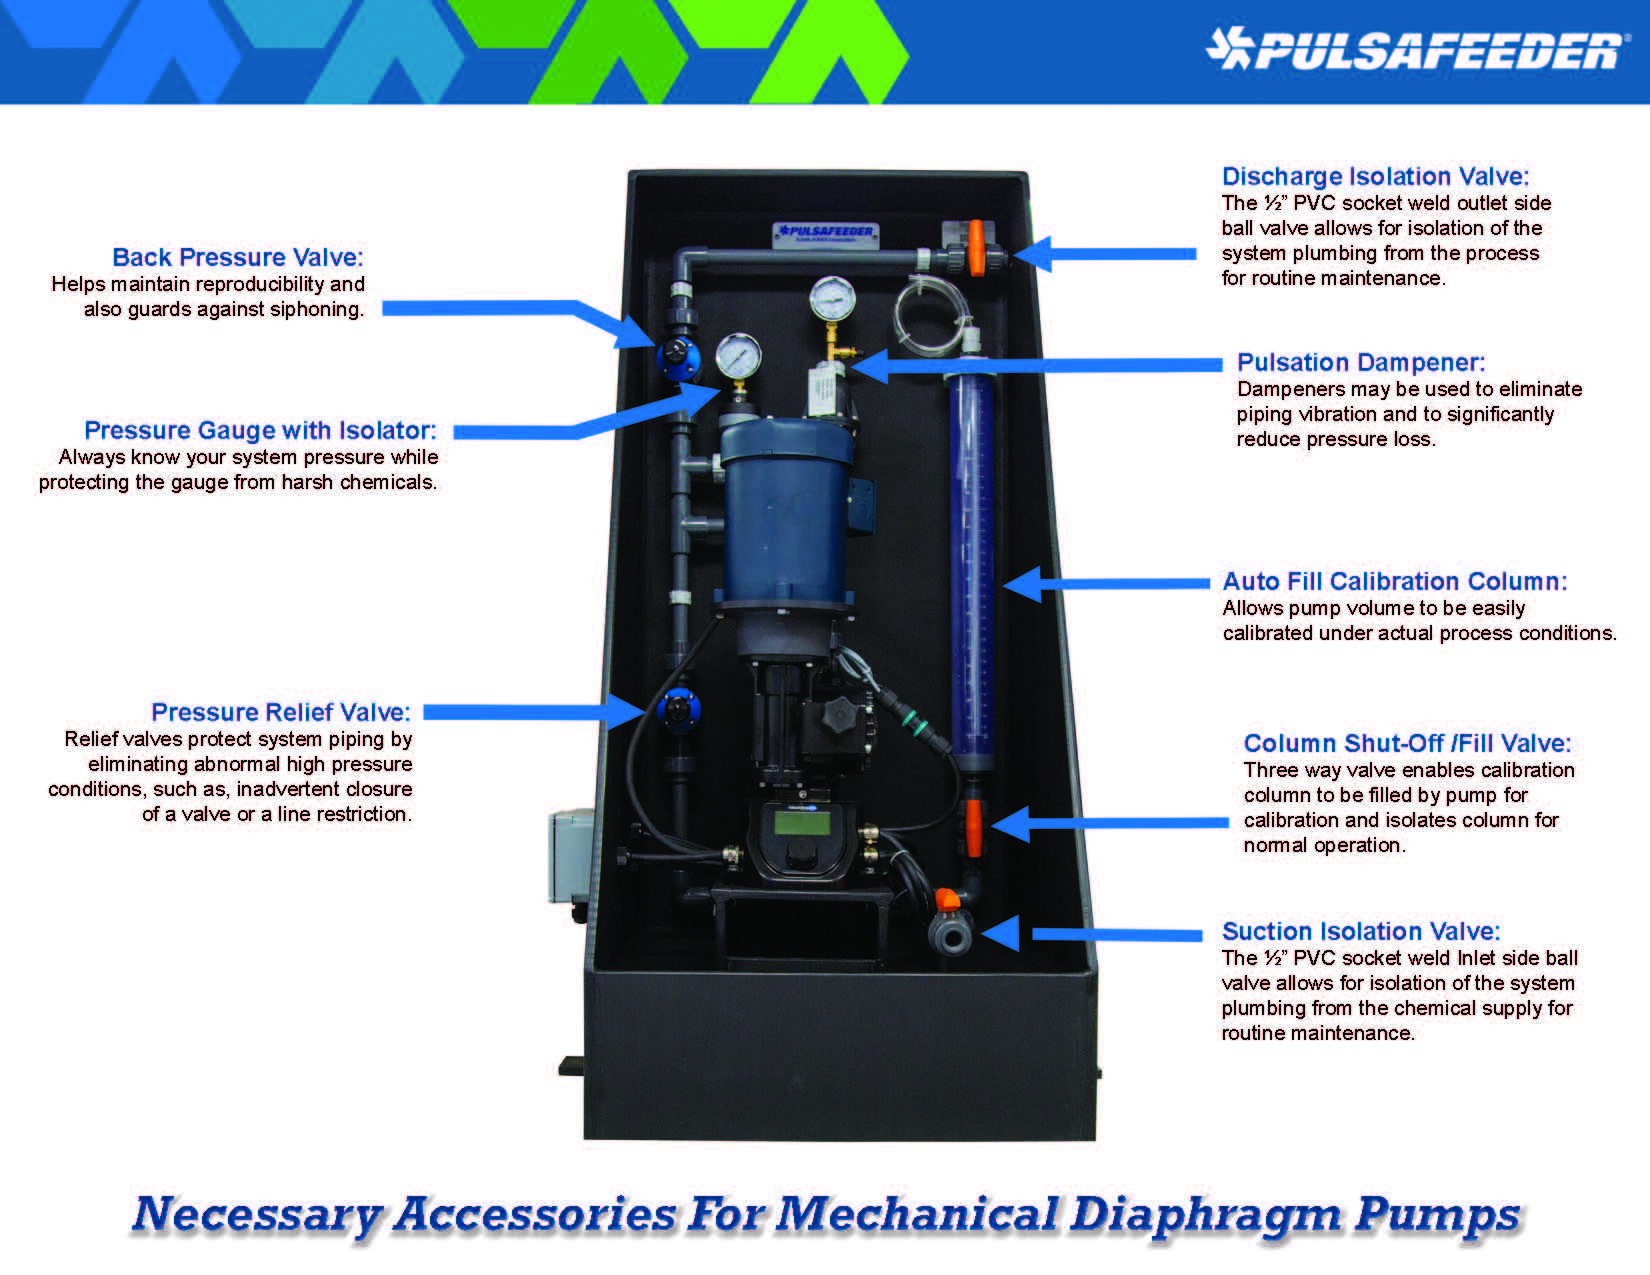 Pulsafeeder Mechanical Diaphragm Pump Accessories 